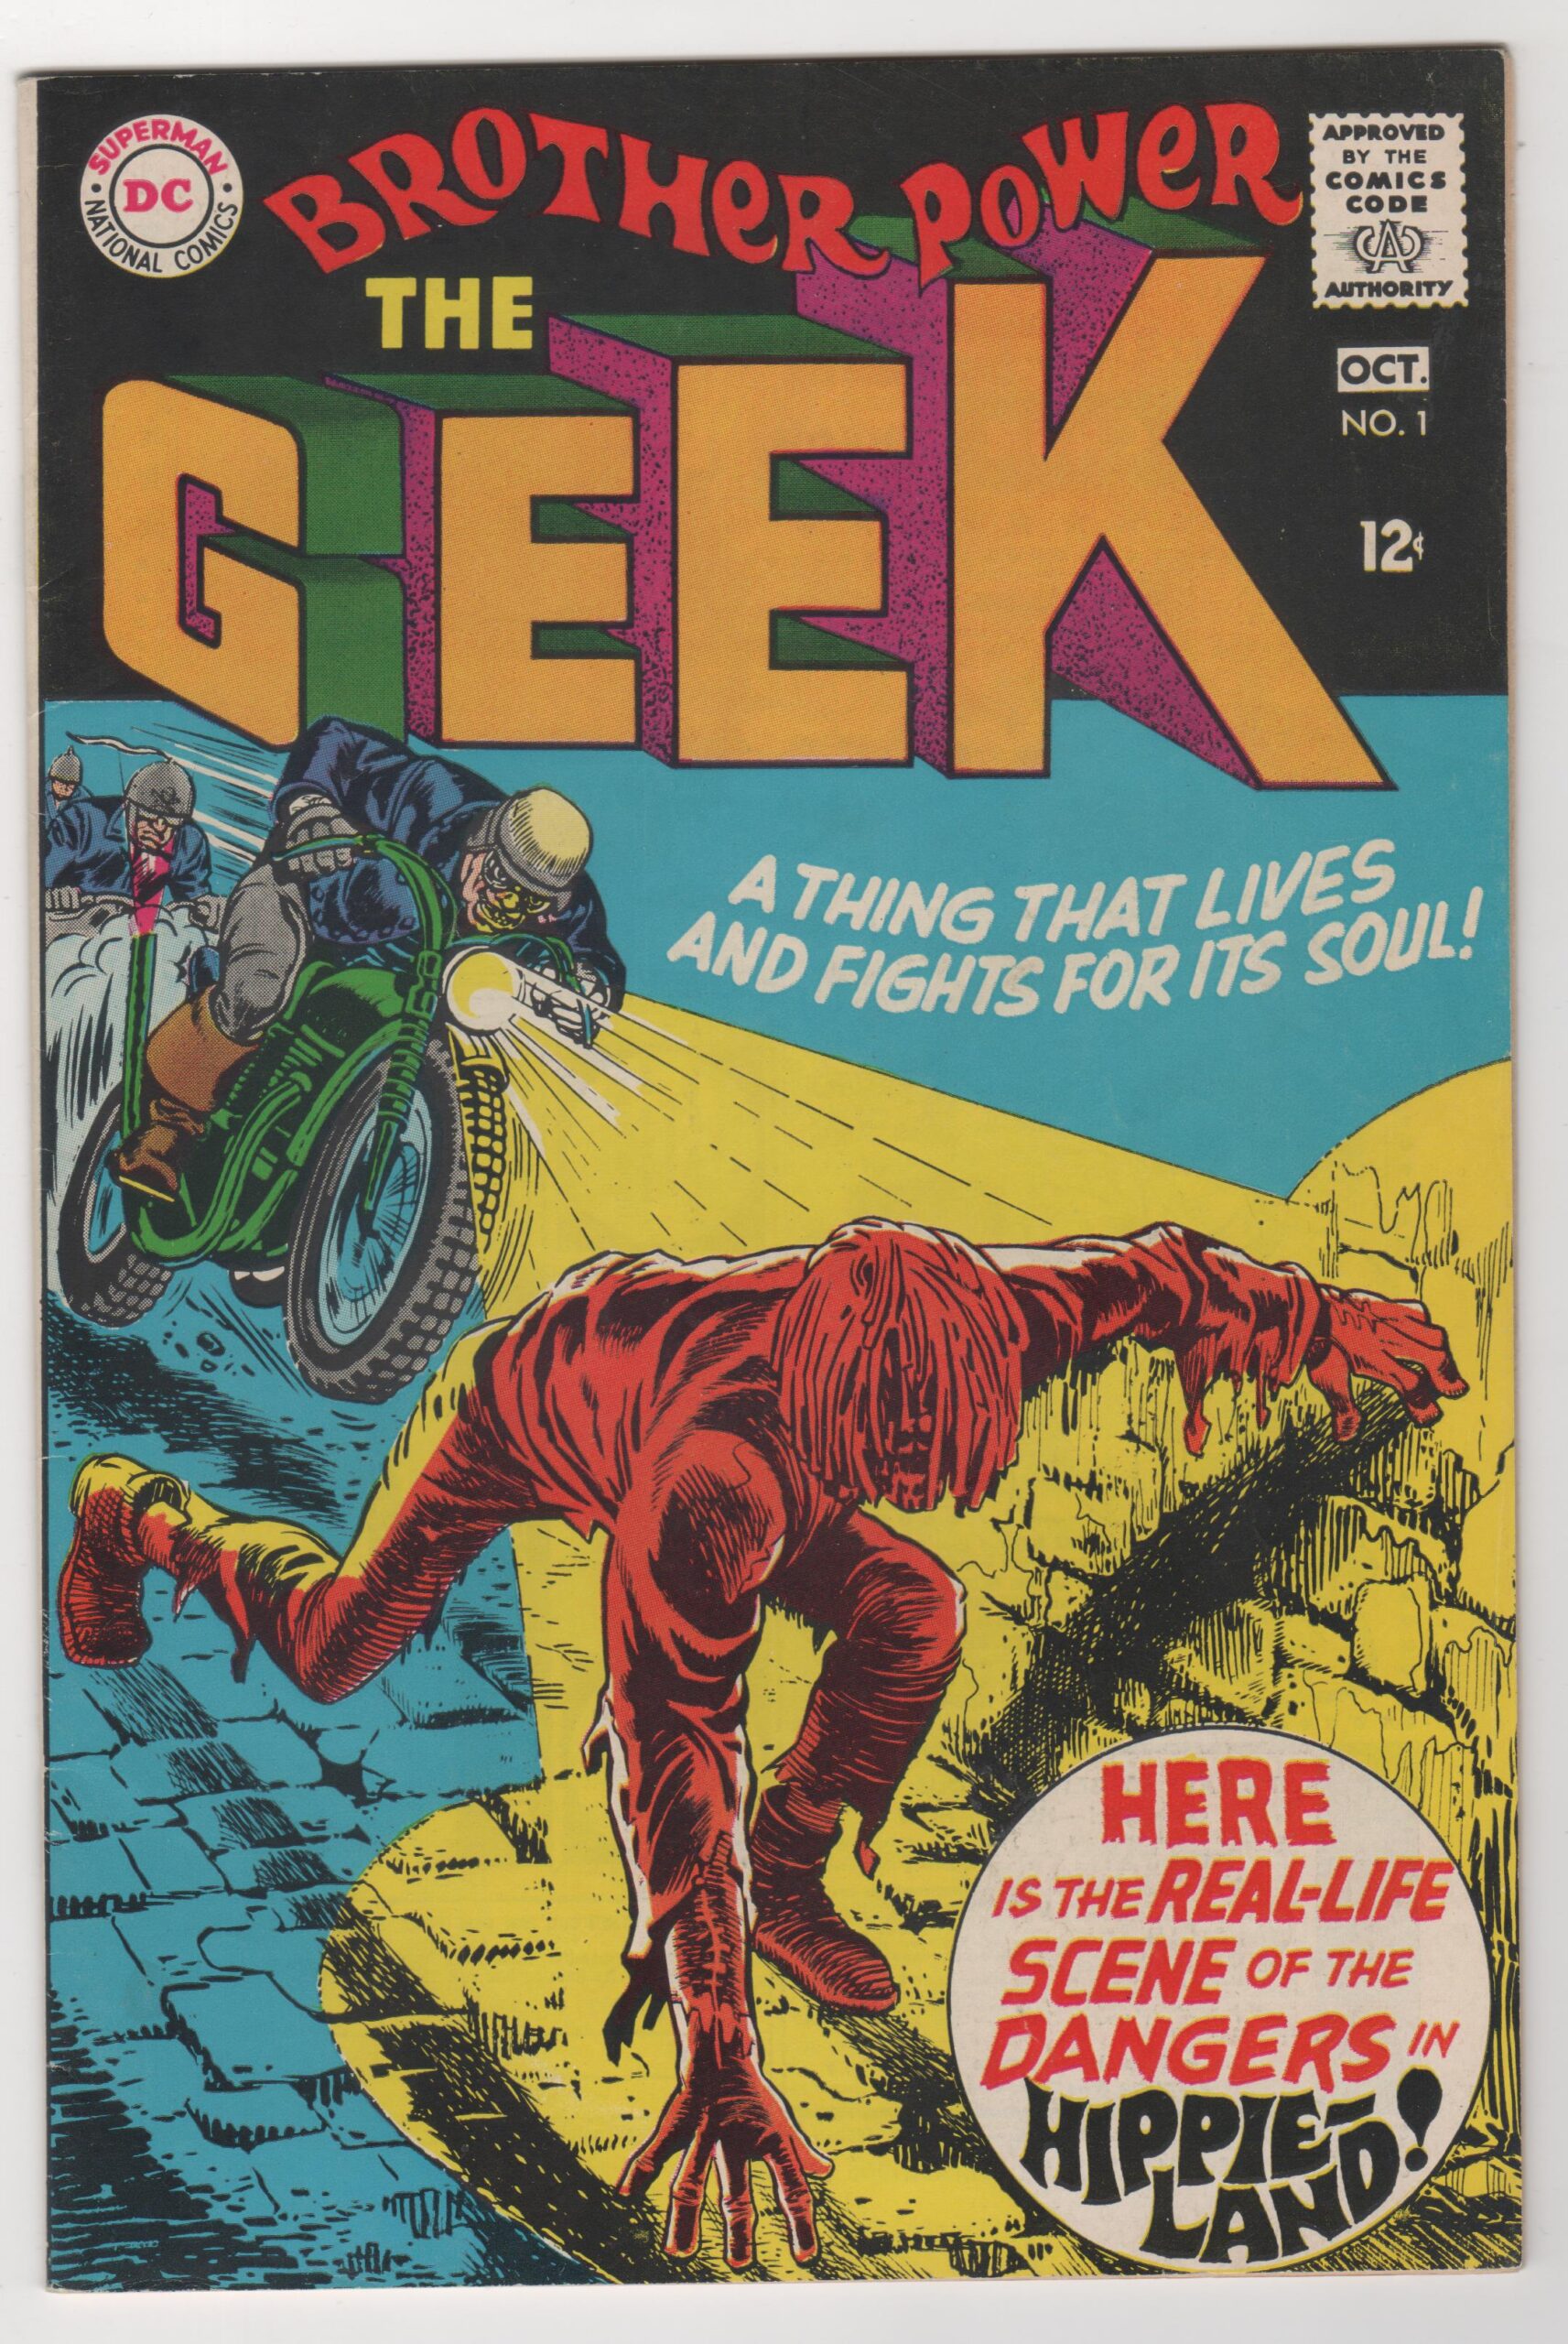 Brother Power The Geek #1 1968 First Print DC Comics Joe Simon